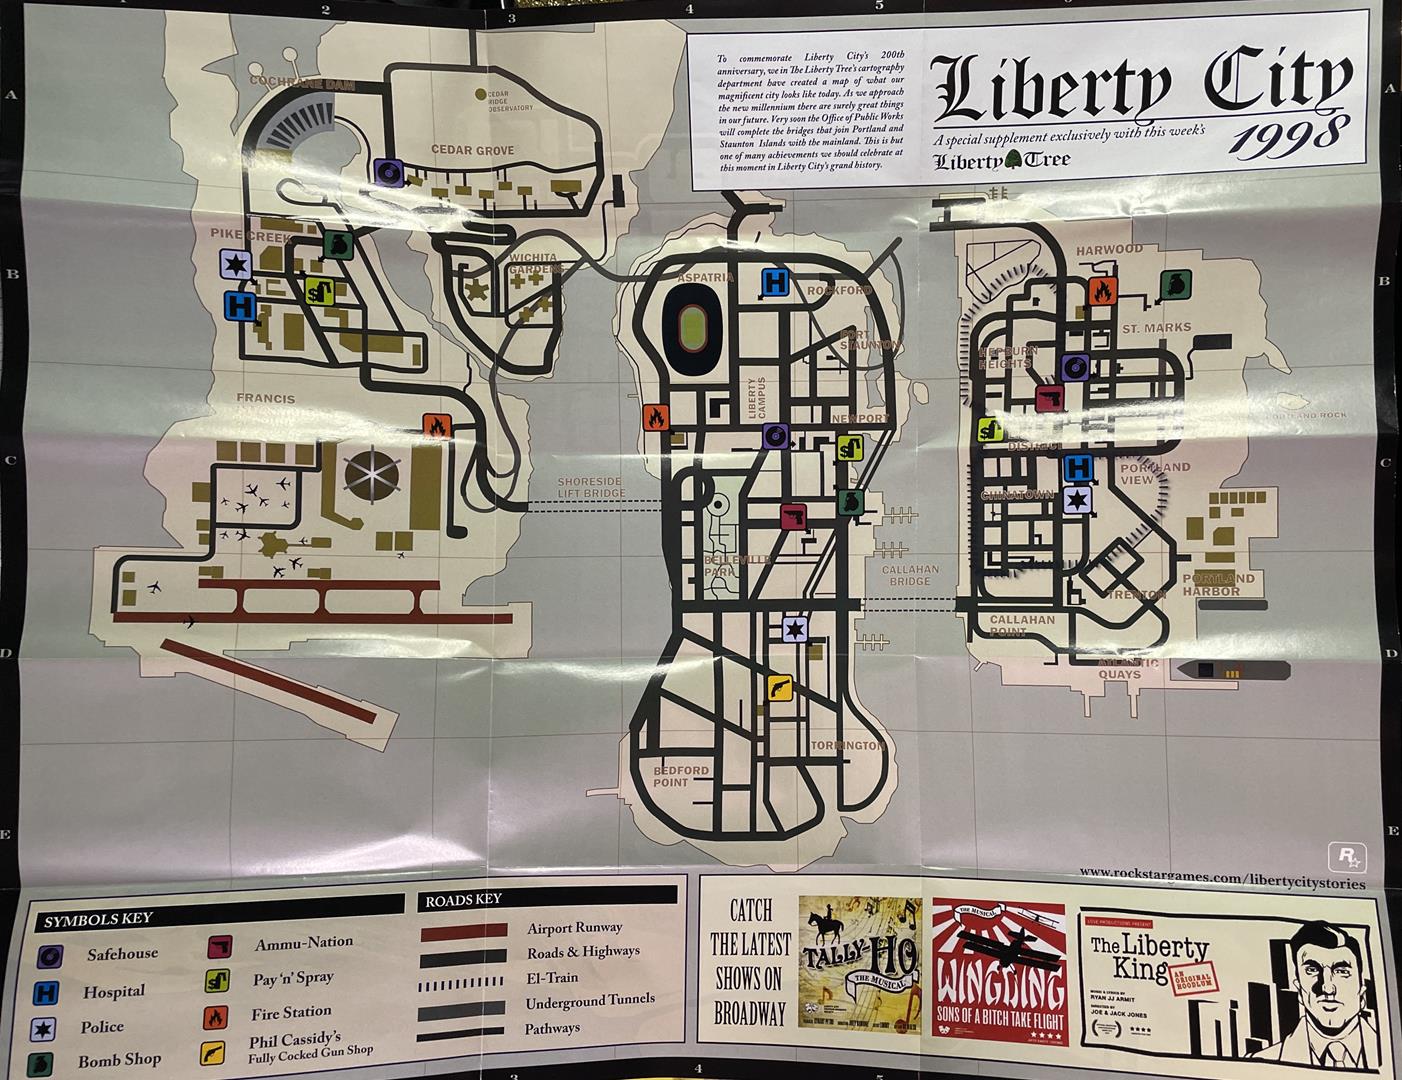 GTA Liberty City Stories - Full Game Walkthrough 